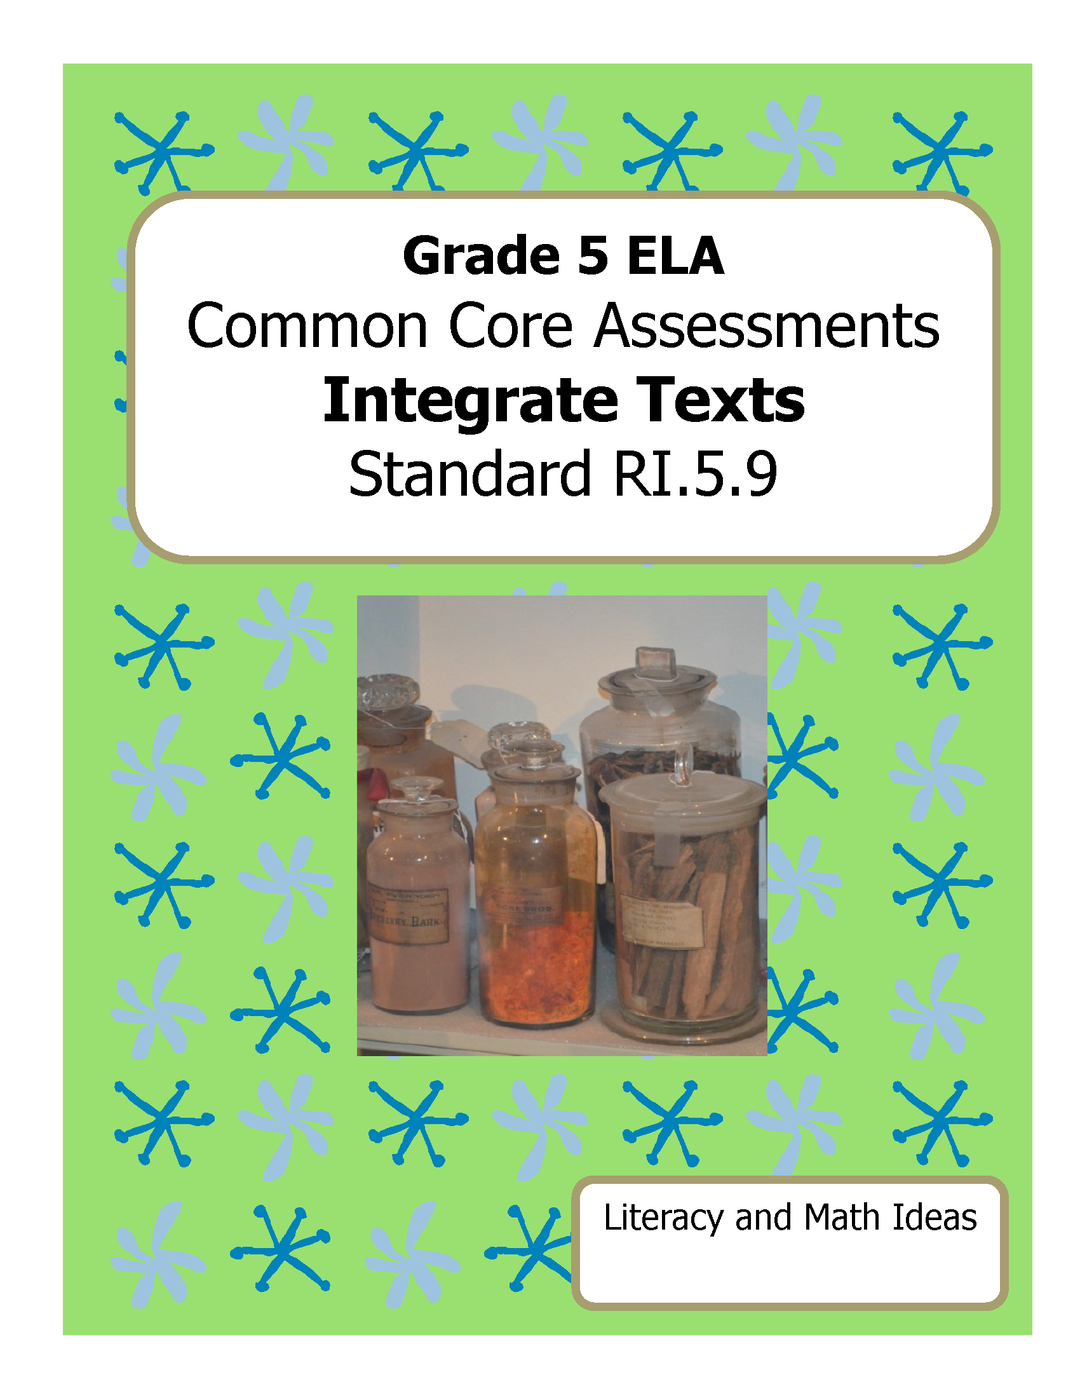 Grade 5 Common Core Assessments: Integrate Texts RI.5.9